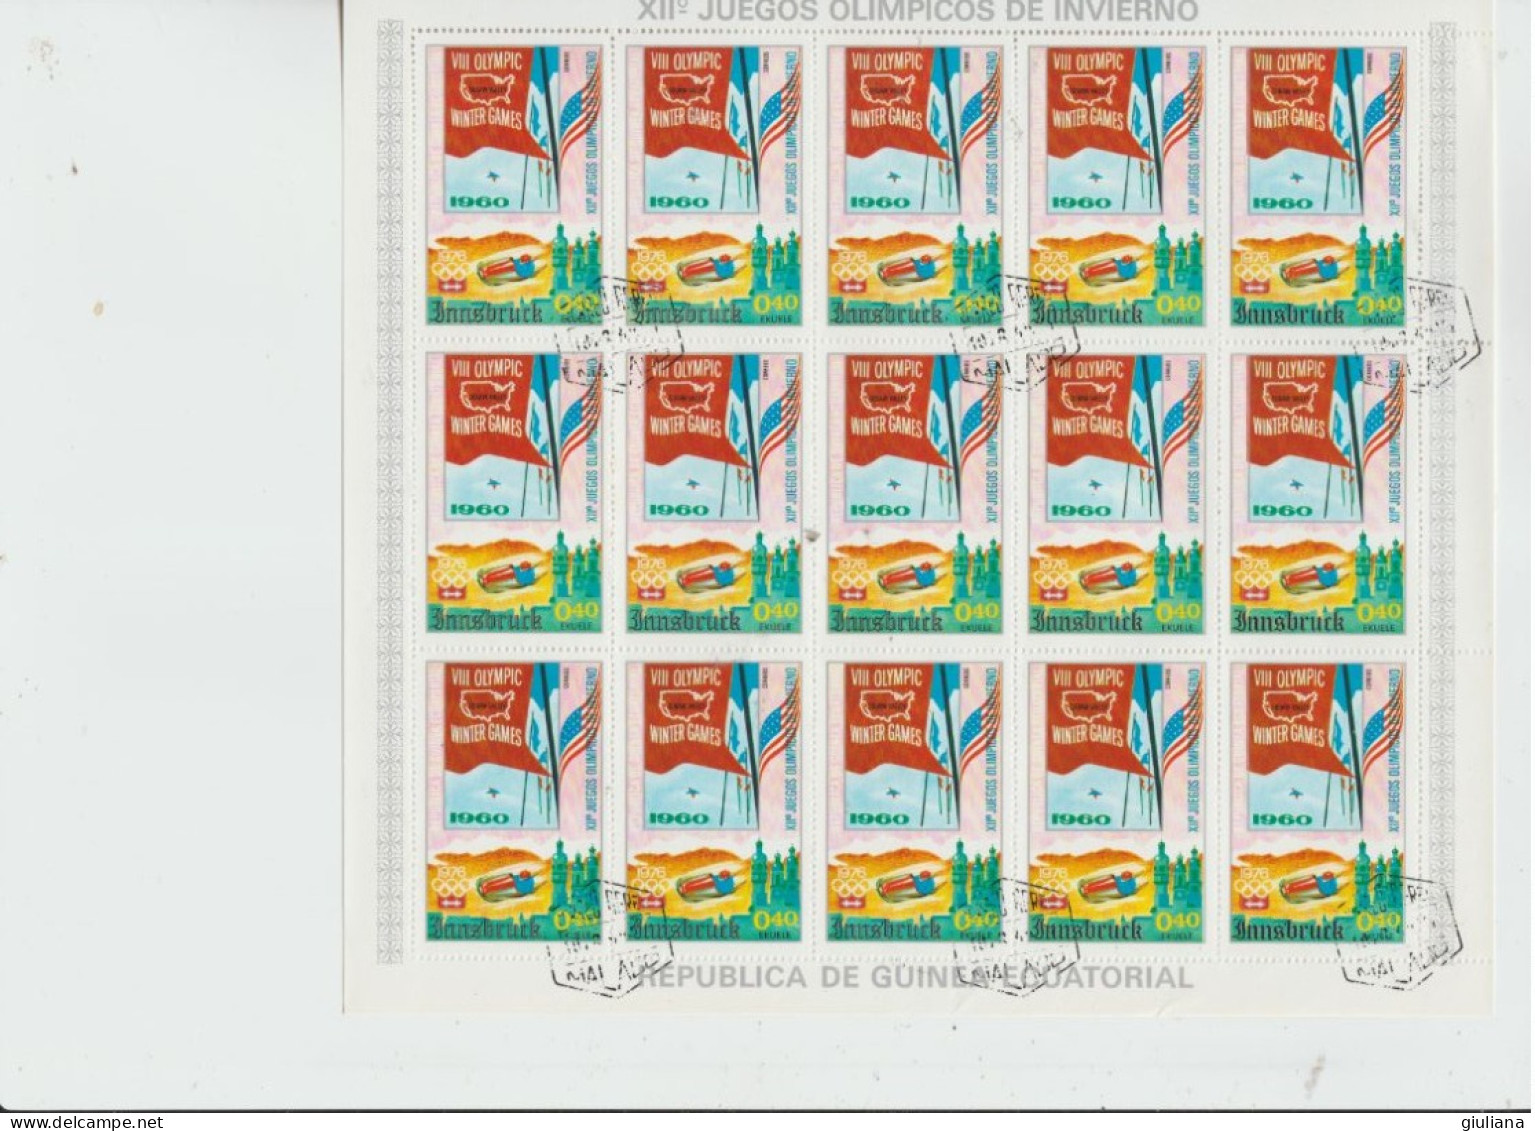 Guinea Eq. 1964 - "XII Giochi olimpici invernali Innsbruck '64" - 8 minifogli used x 120 francobolli